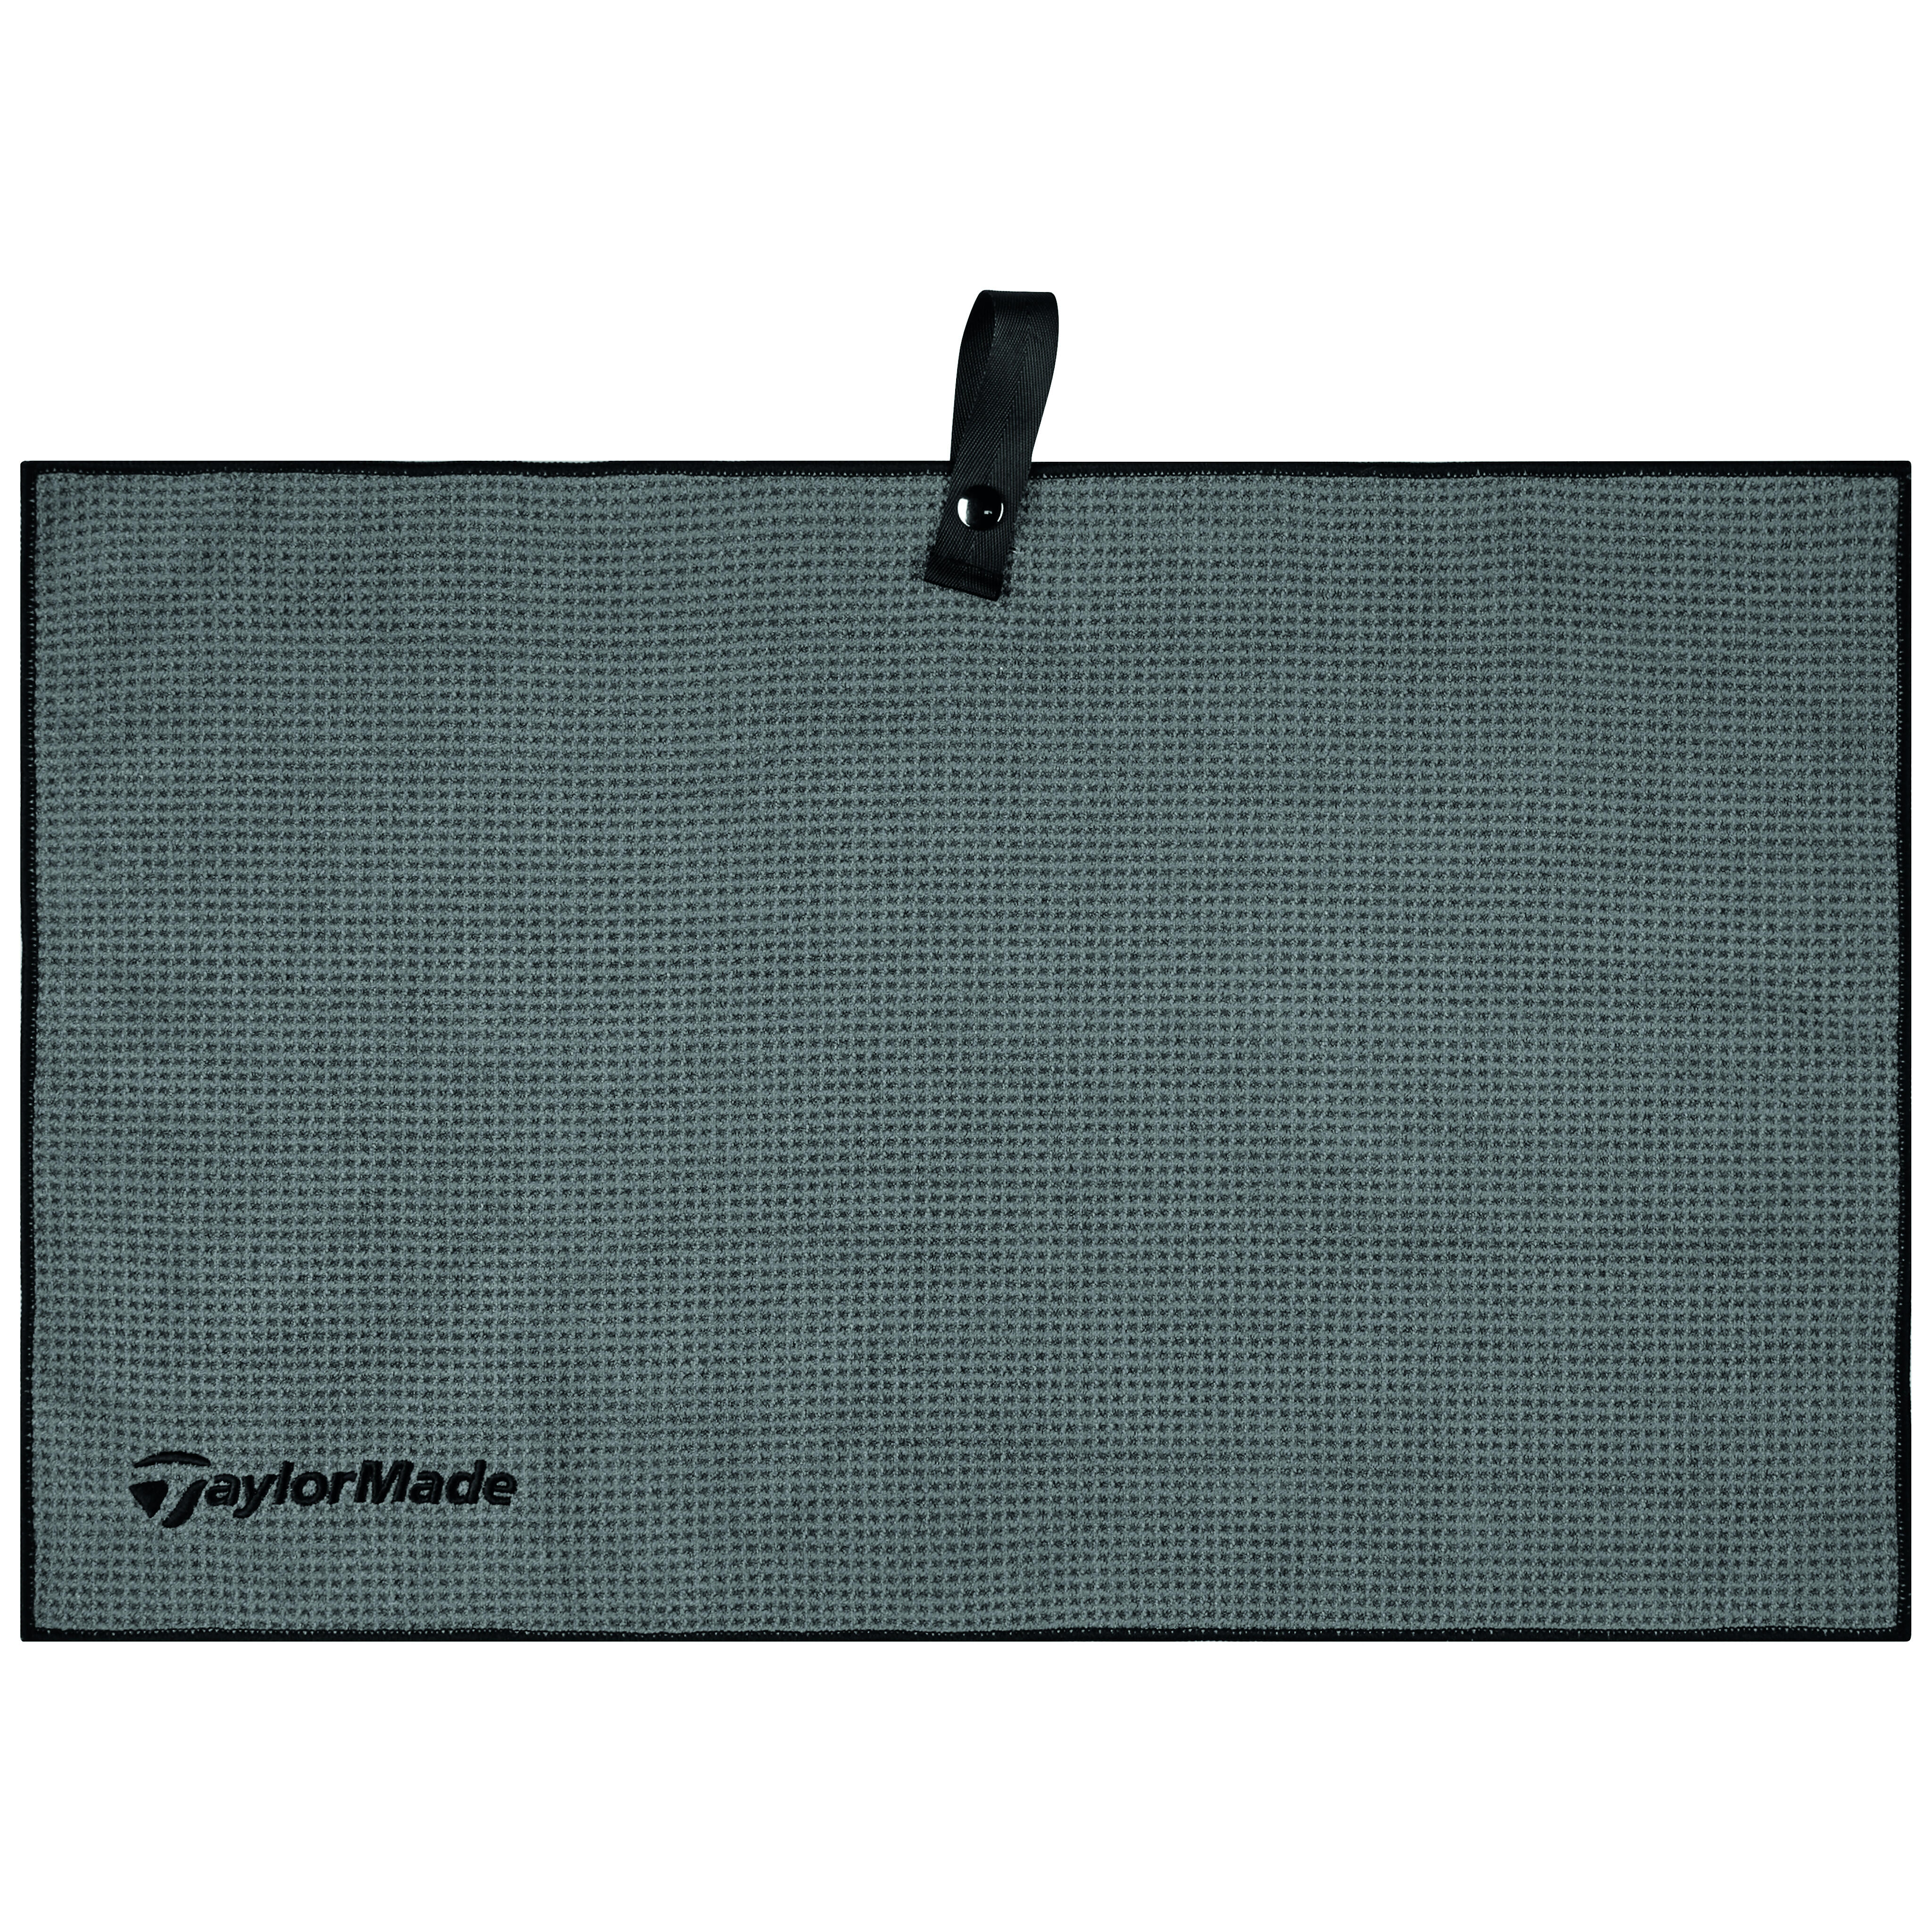 Golf Handtuch Mikrofaser - TaylorMade grau